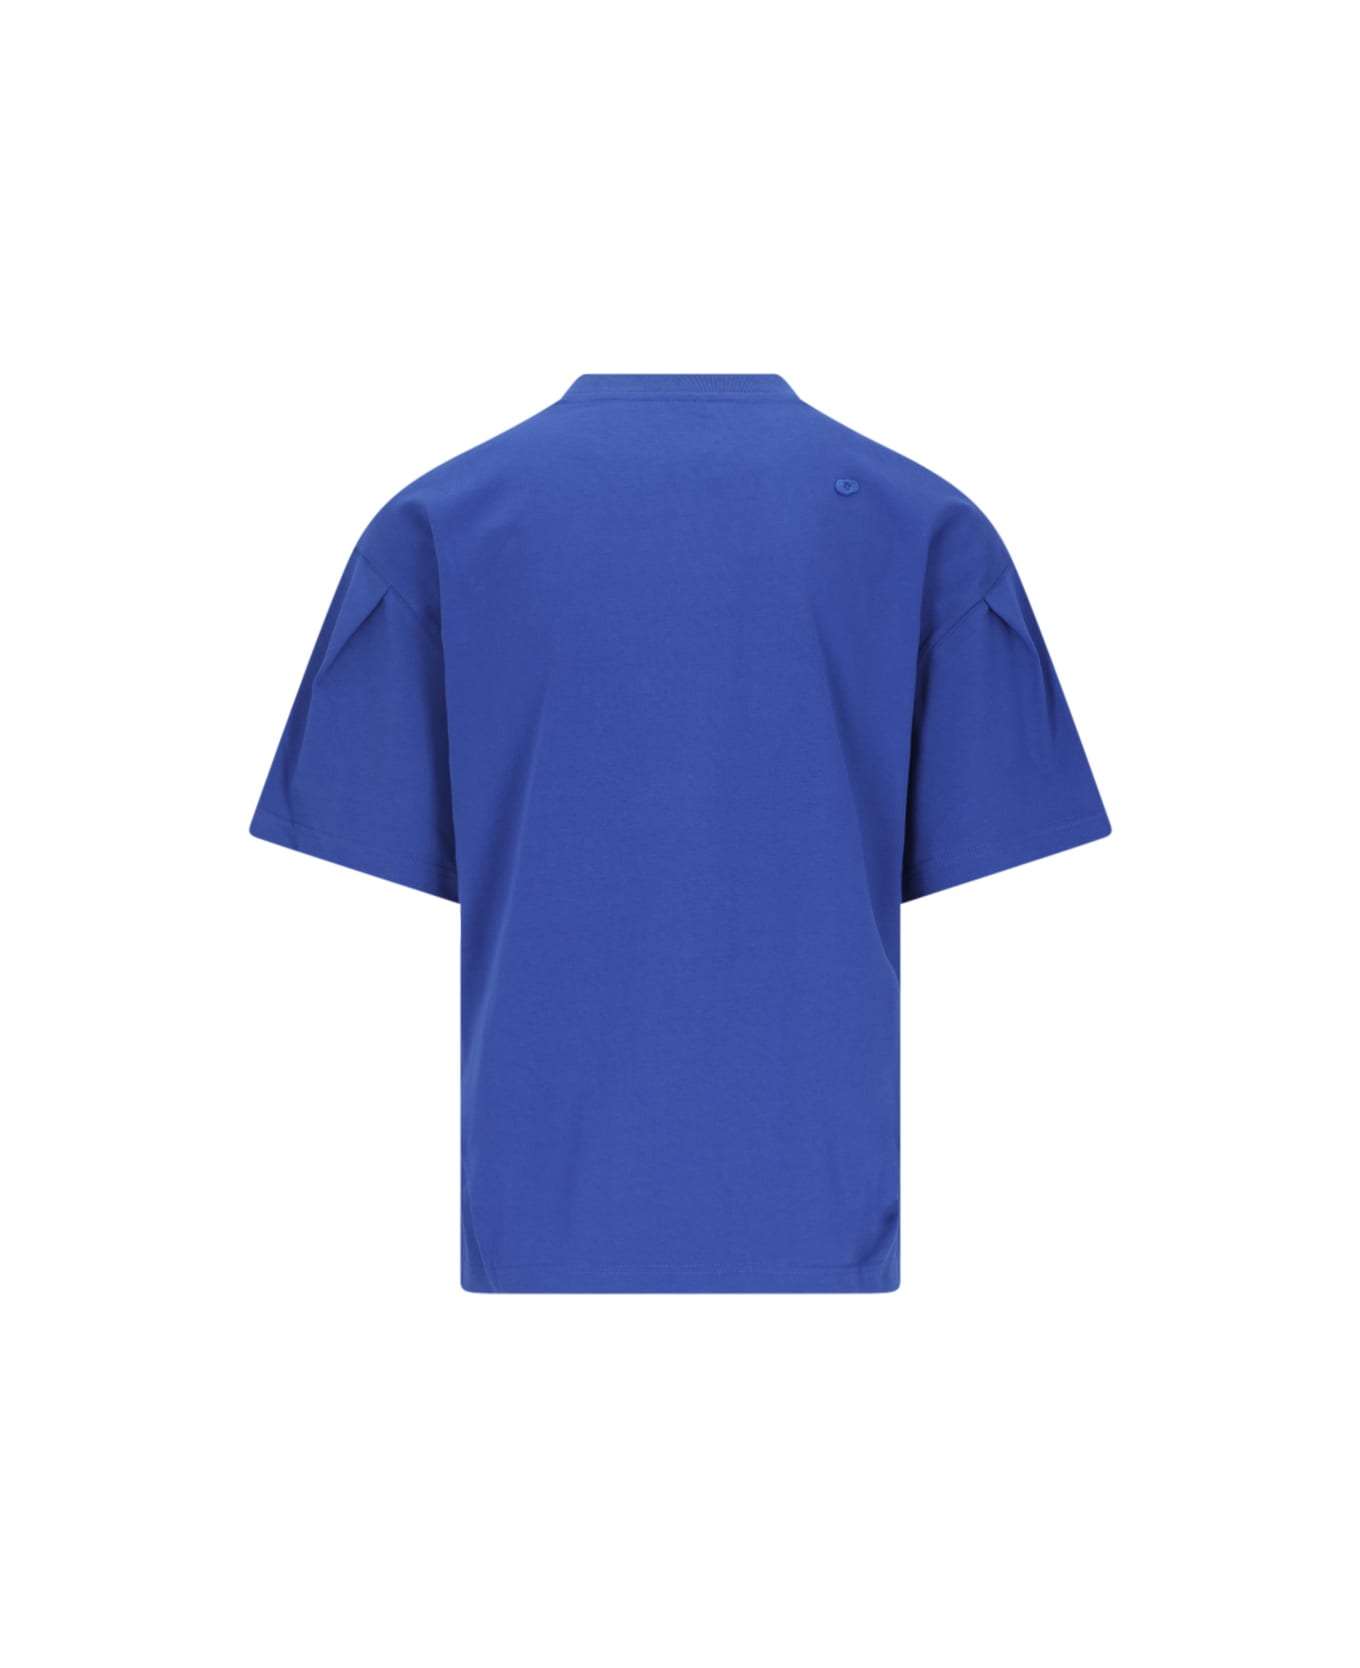 Ader Error T-Shirt - Blue